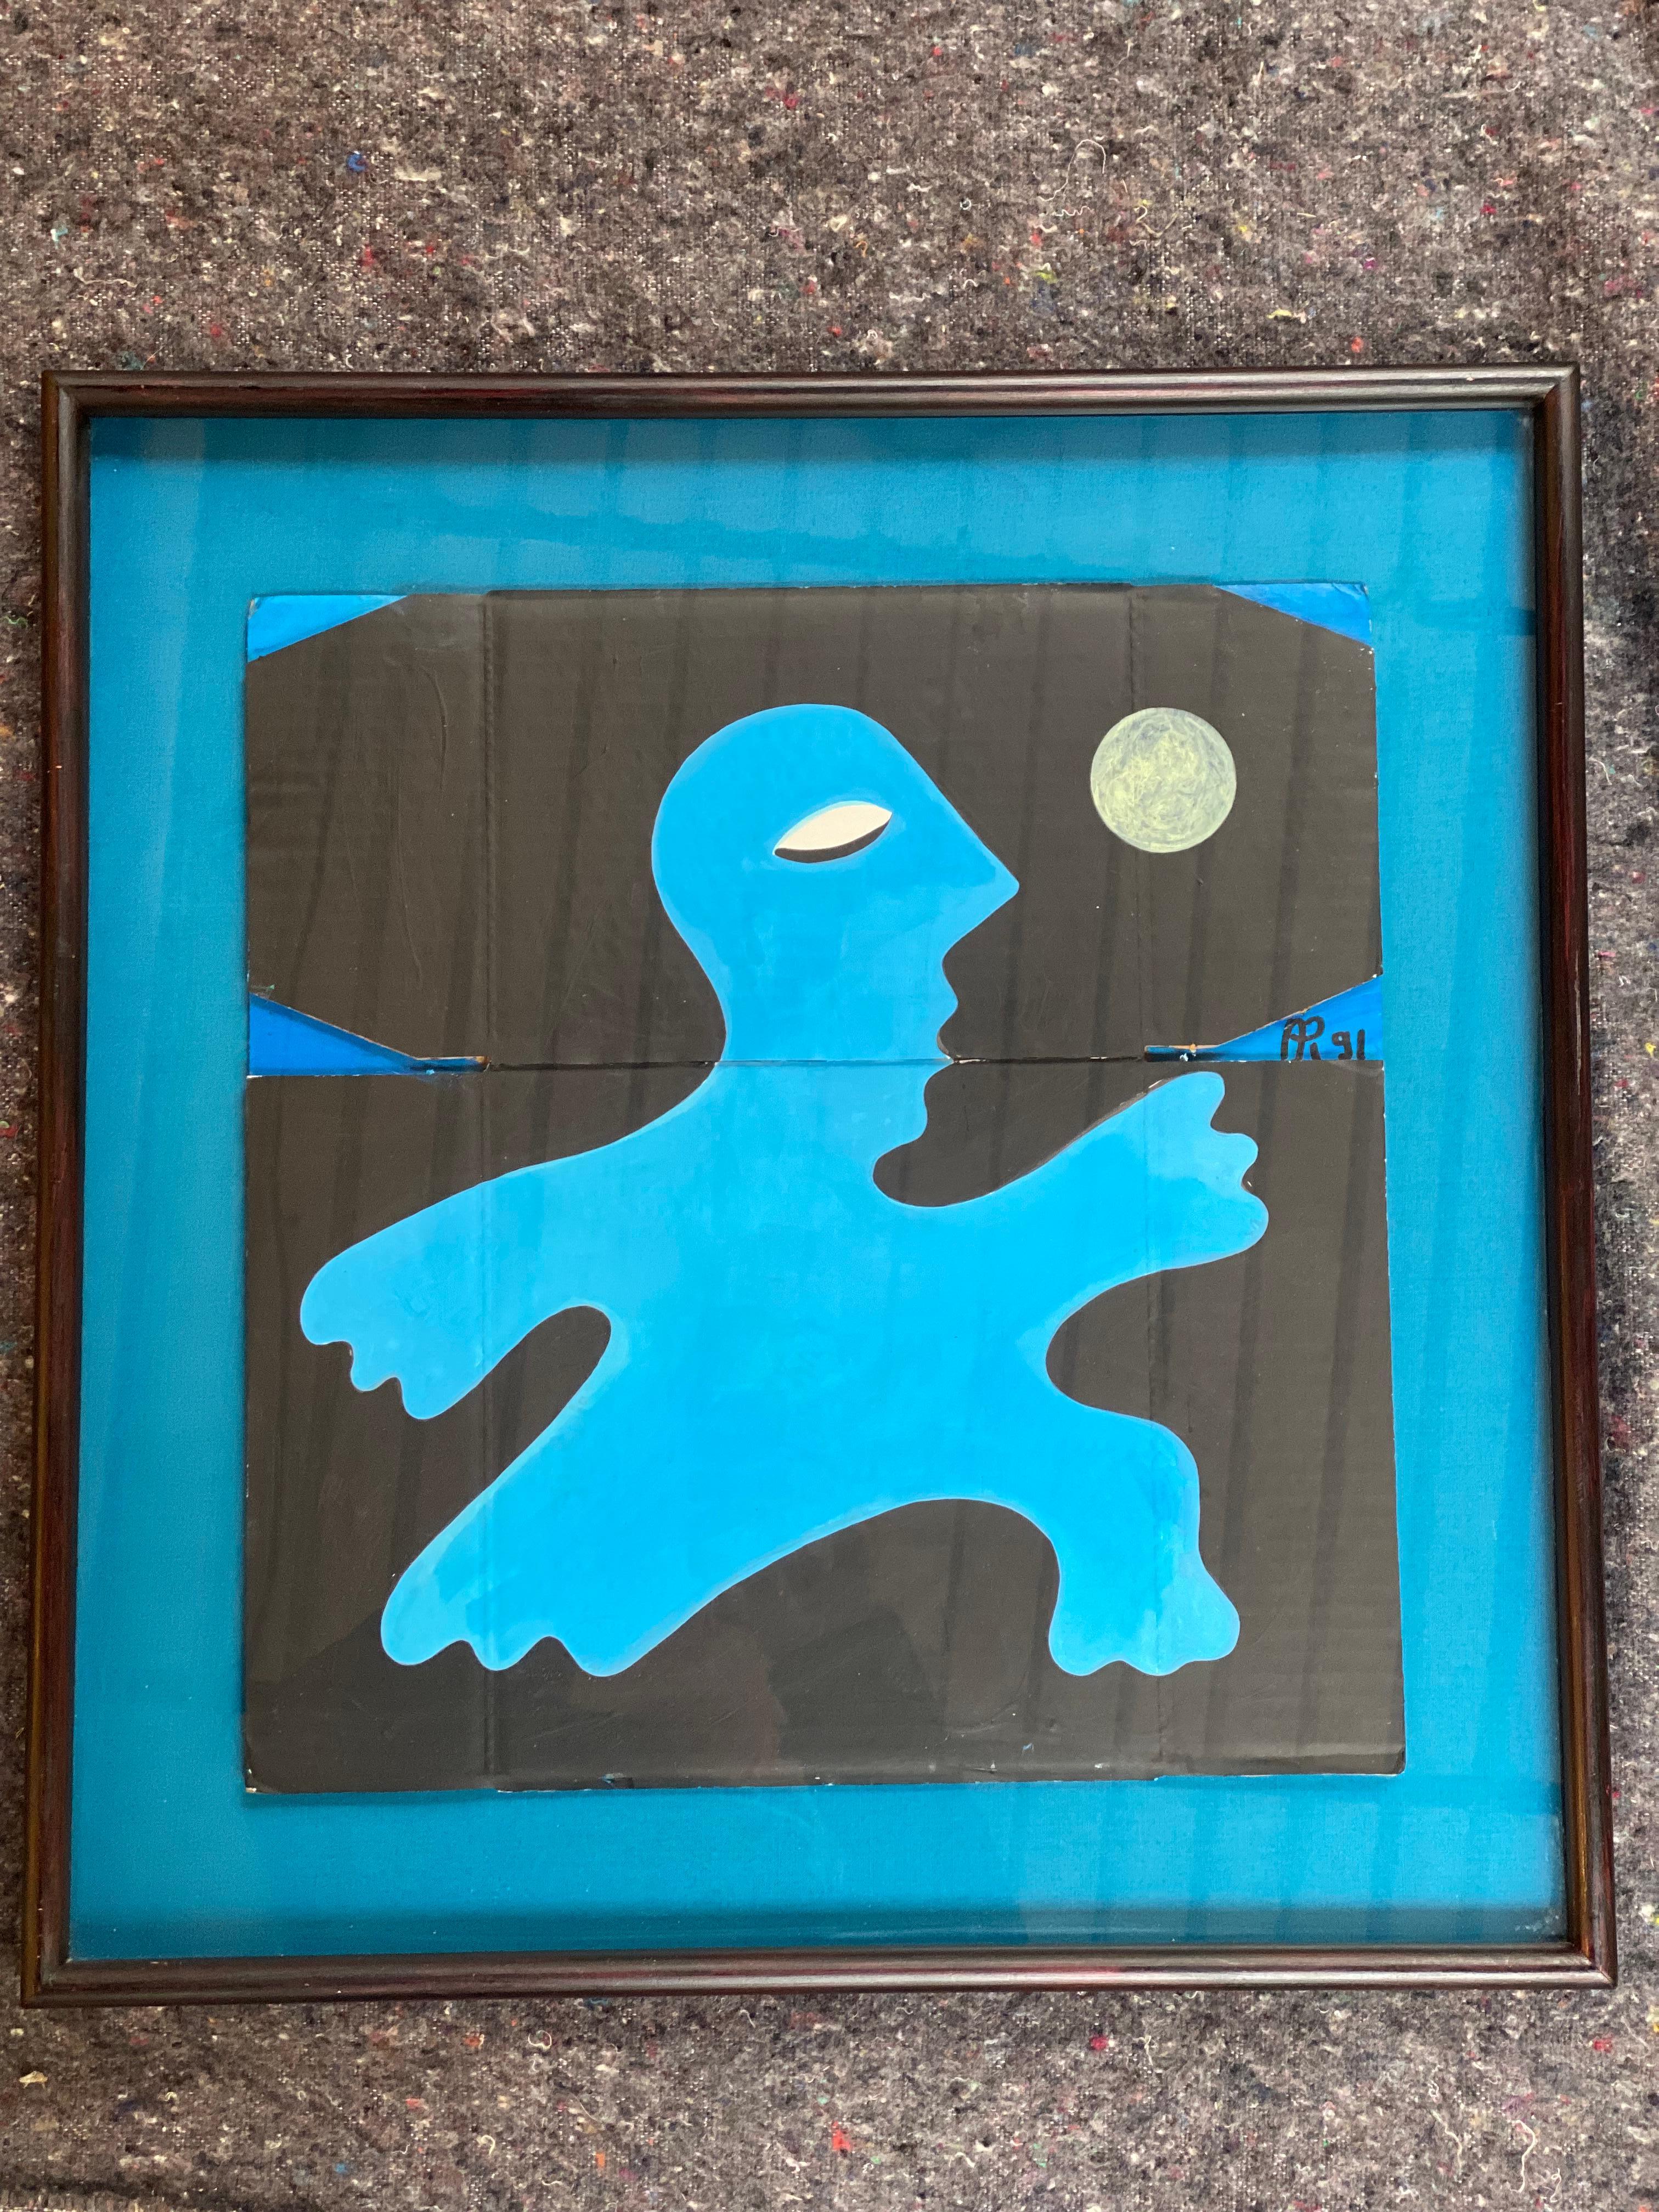 Alain Rothstein
The blue man
Oil on cardboard
Circa 1991
Signed AR91
Beautiful framing
Frame dimensions: 58 x 56 x 4 cm
Dimensions of work: 39 x 42